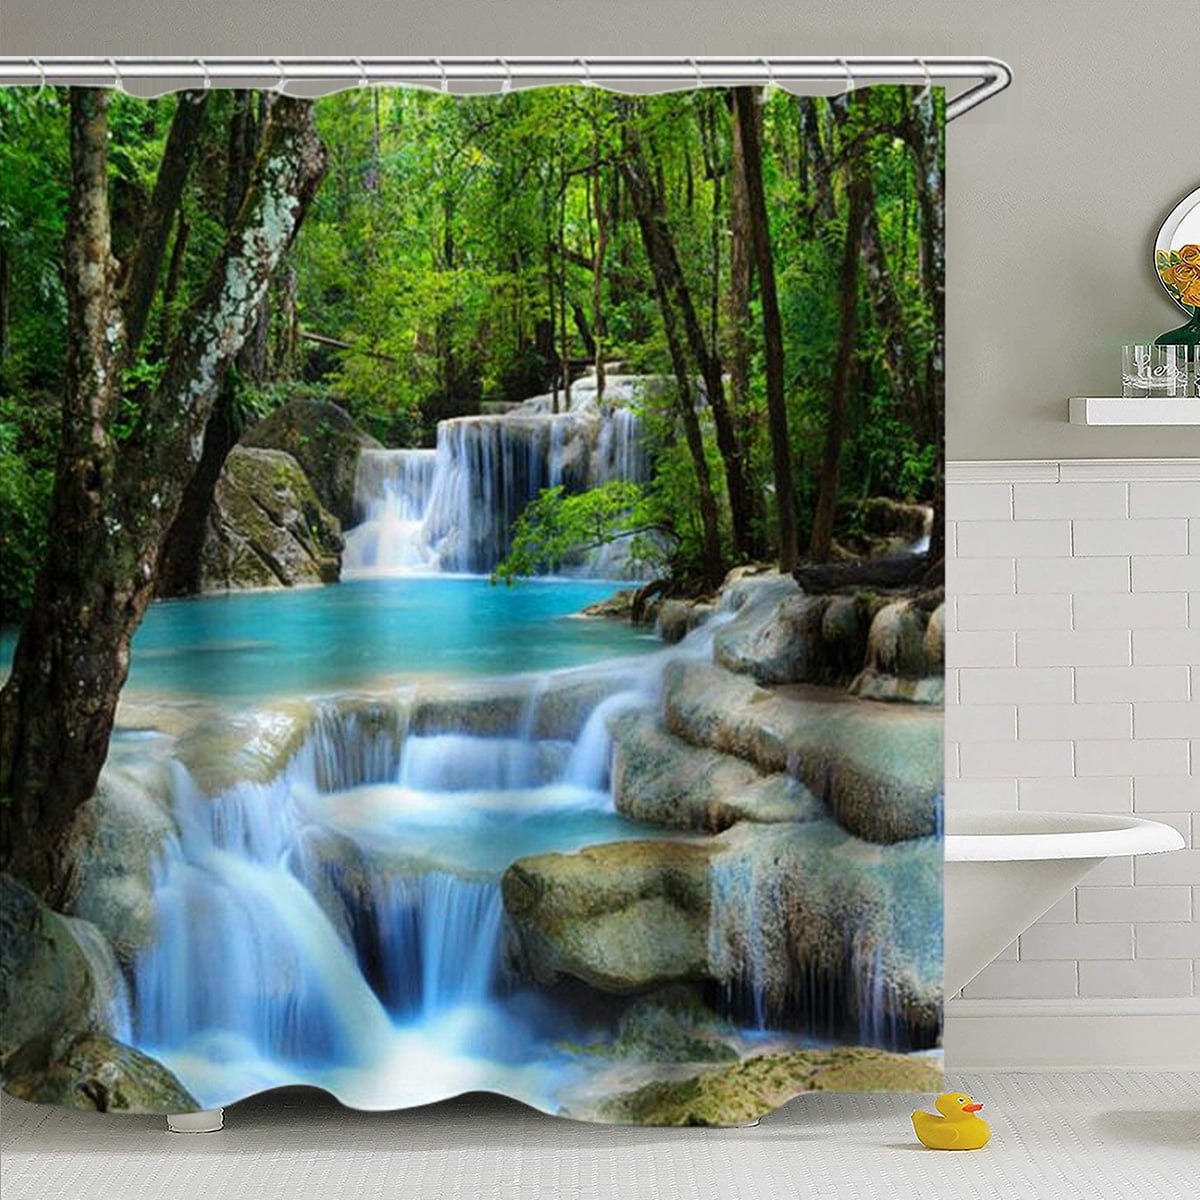 Stream Scenery Nature Shower Curtain Lid Toilet Cover Pedestal Rug Bathroom Mat 